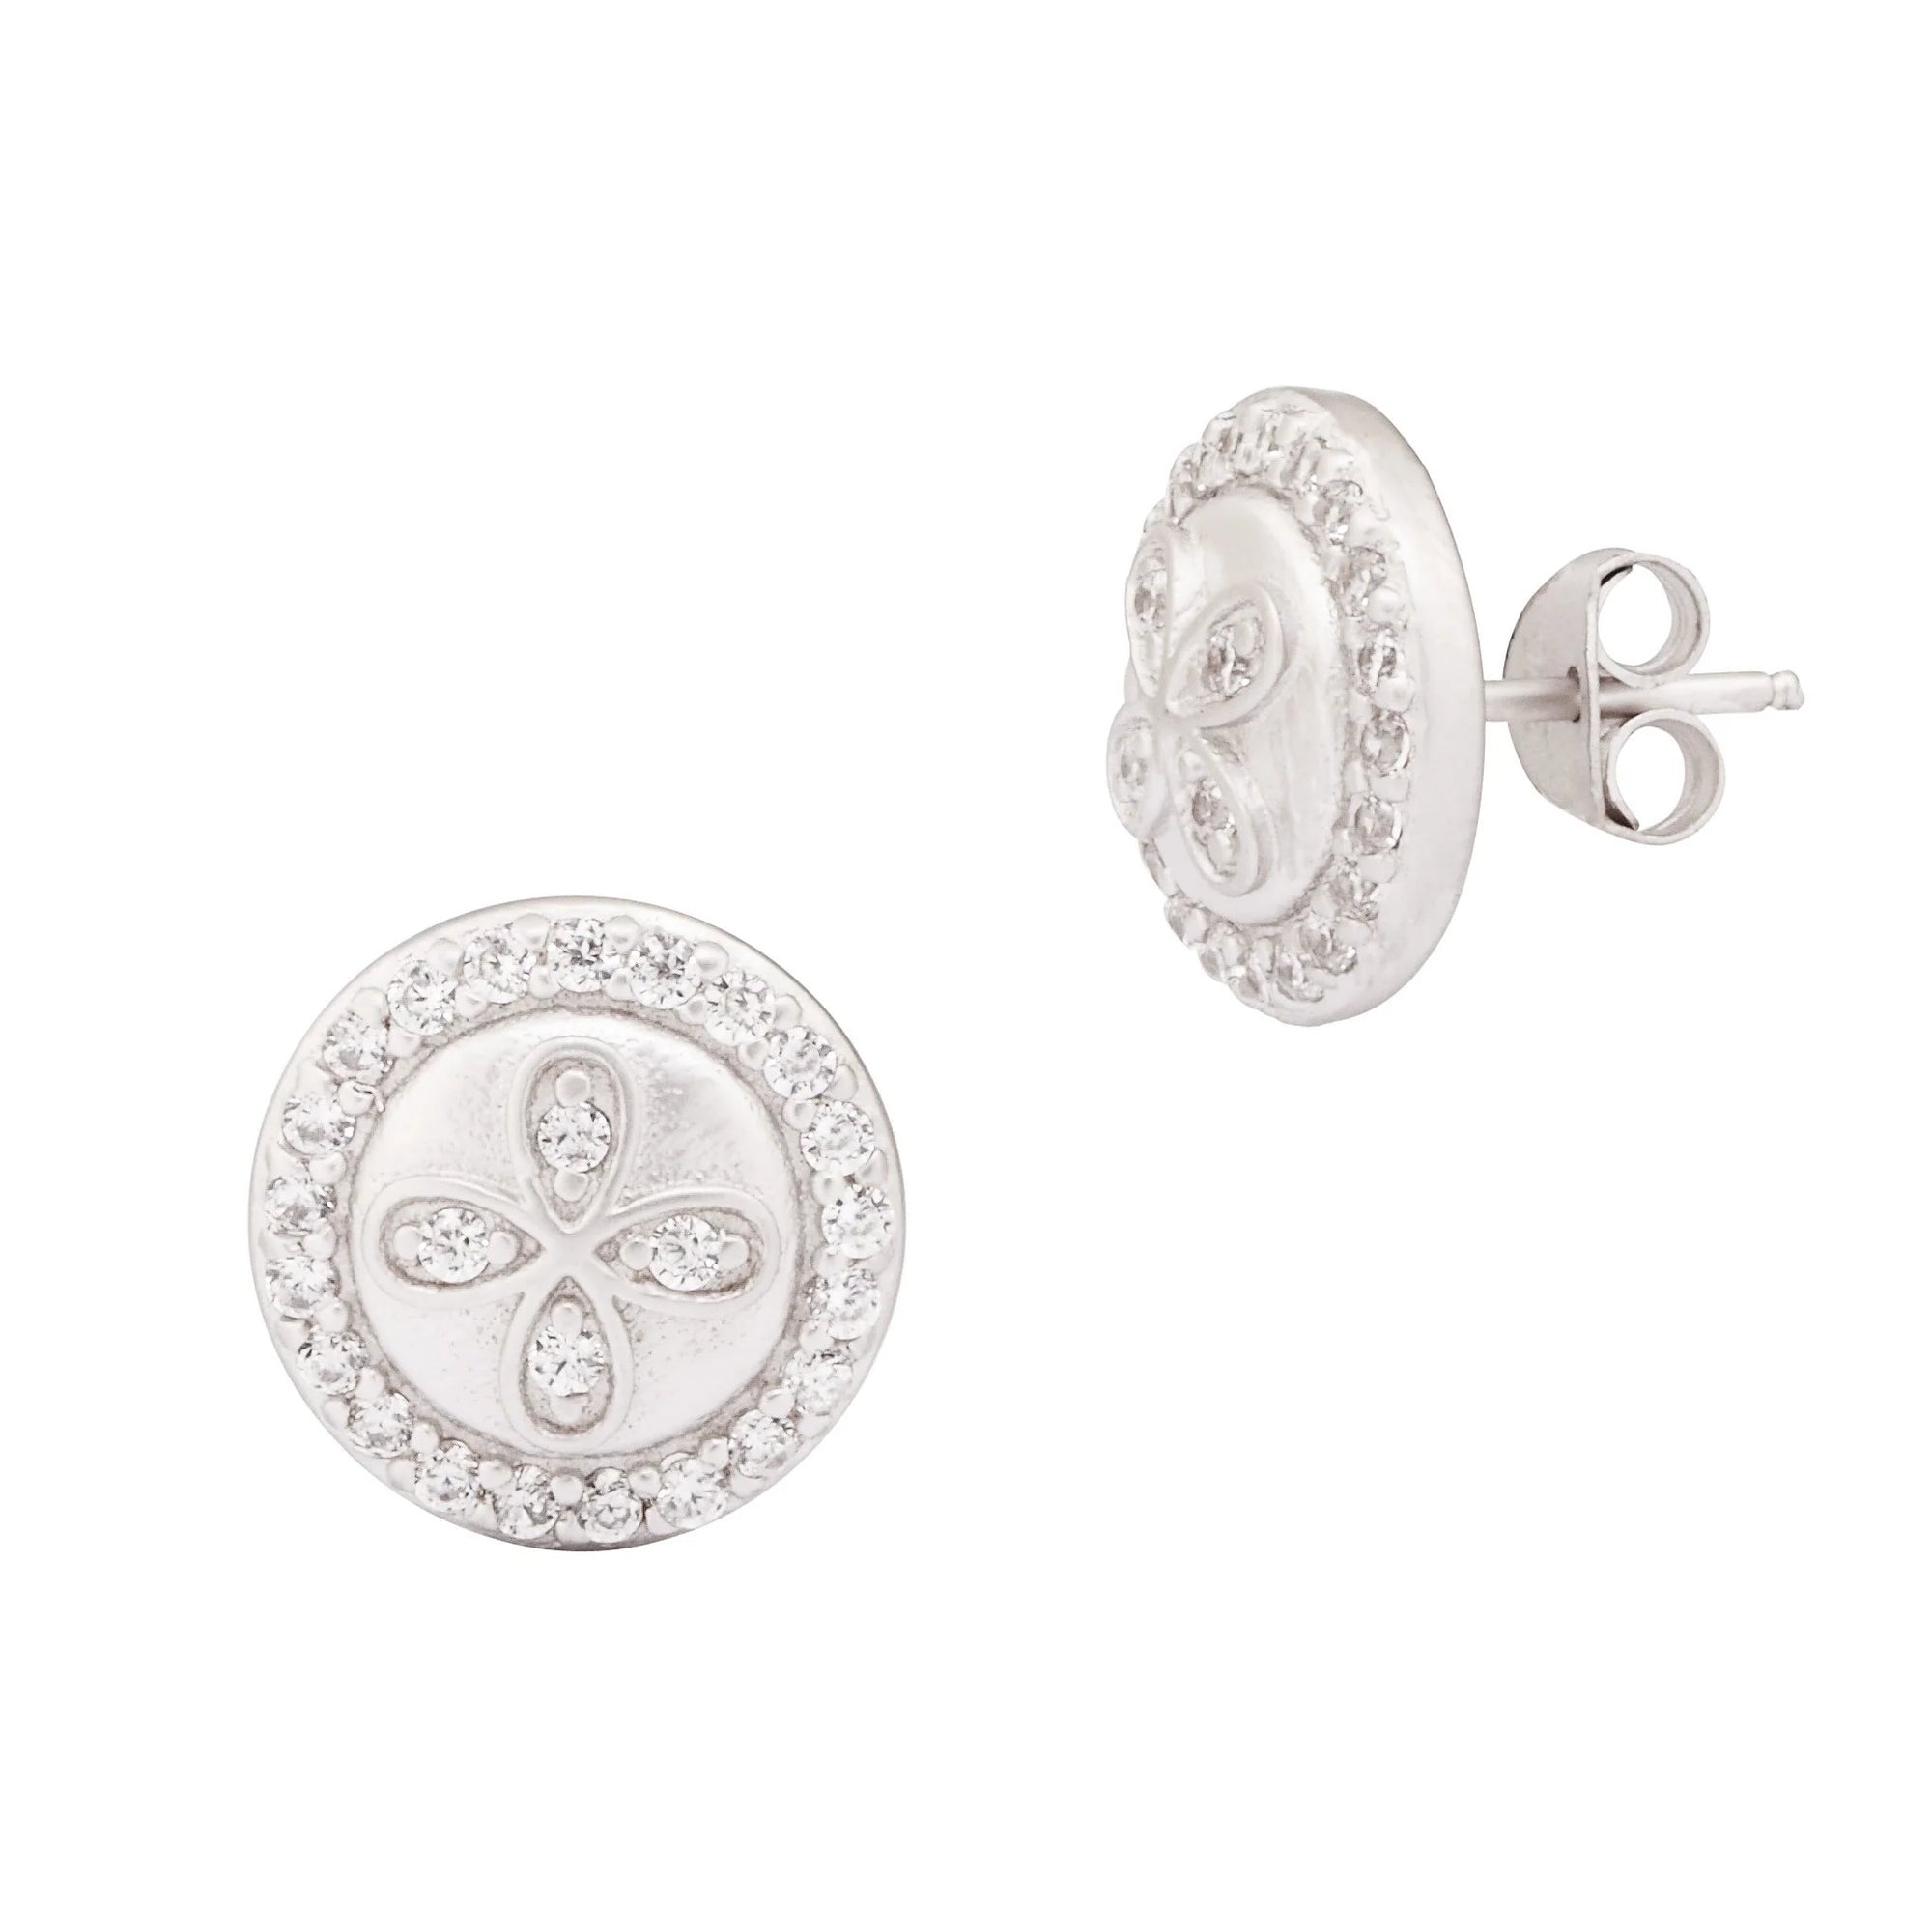 Freida Rothman "Clover Stud Silver Earrings"